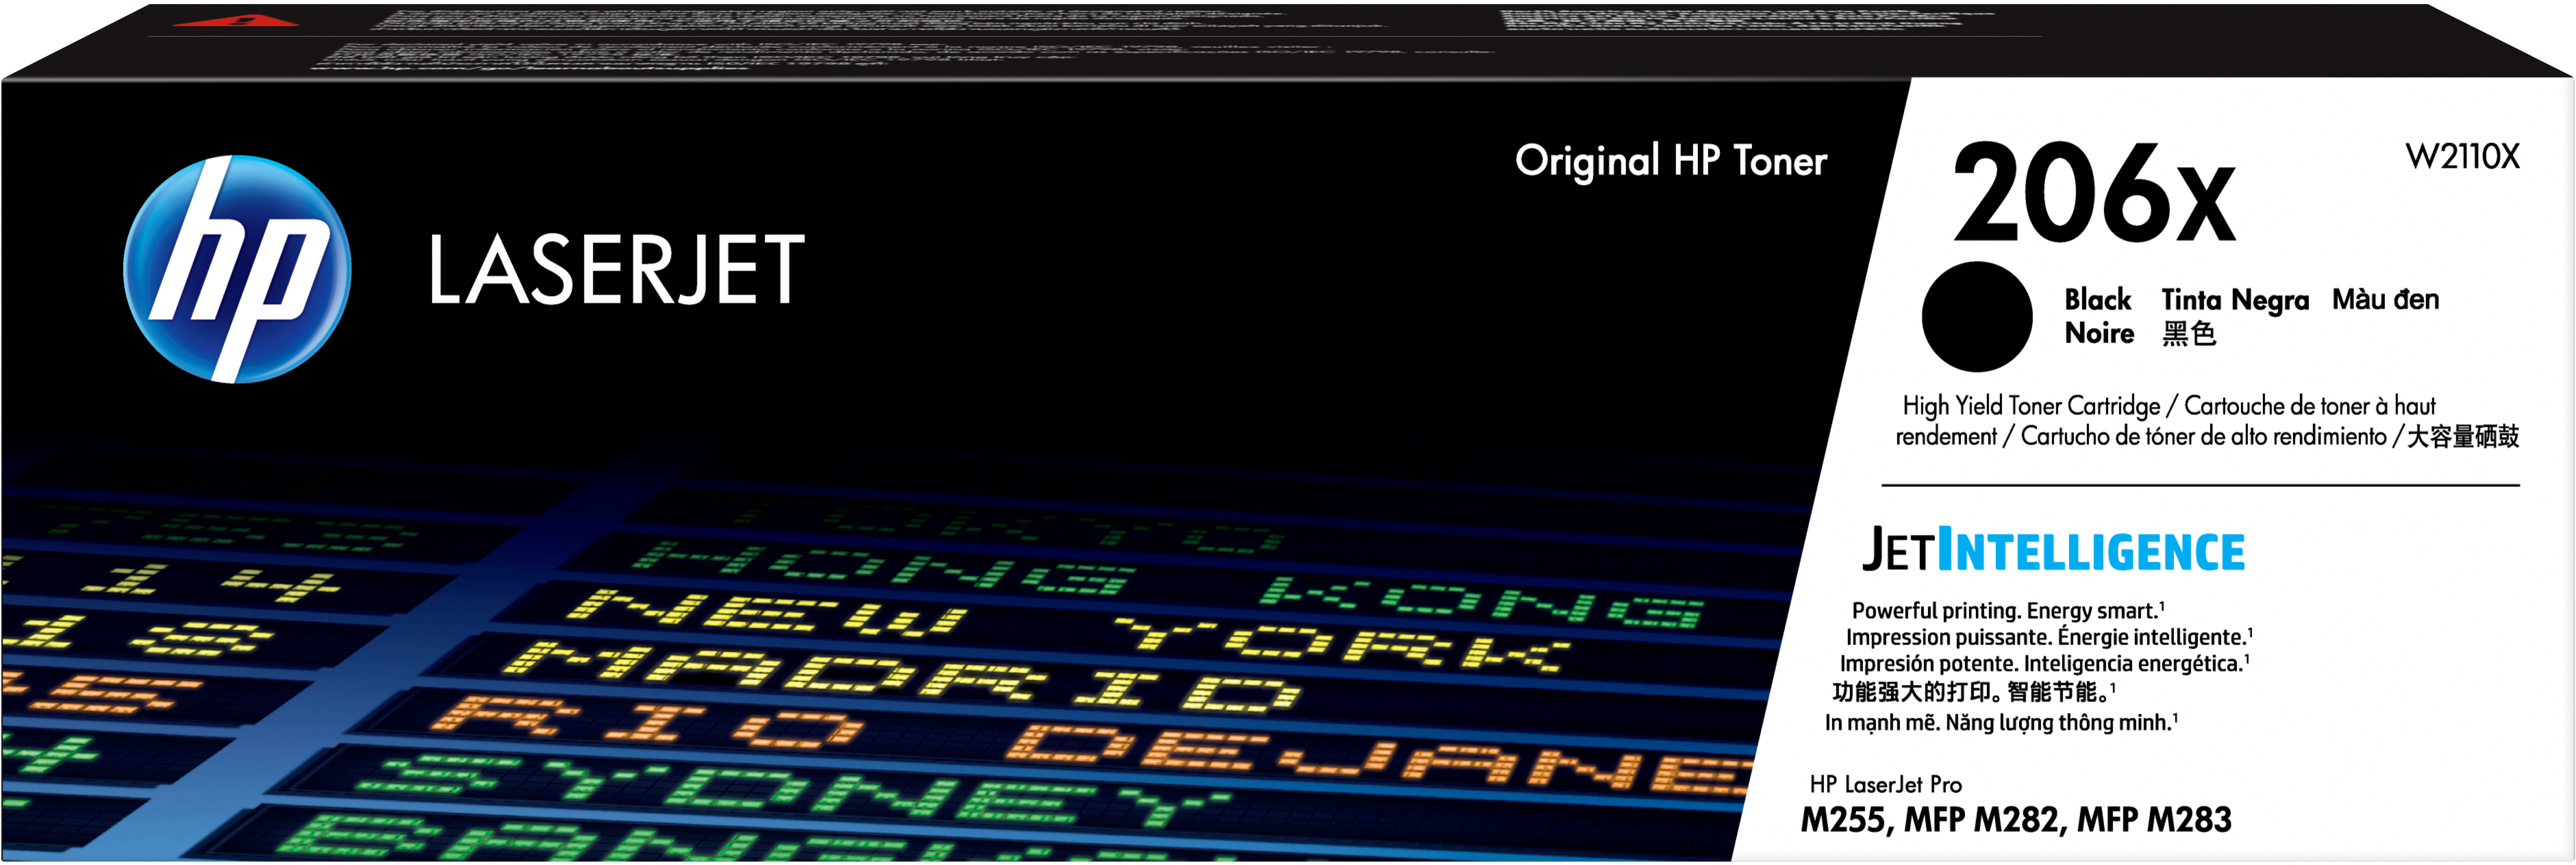 HP 206X HIGH YIELD BLACK ORIGINAL LASERJET TONER CARTRIDGE, W2110X